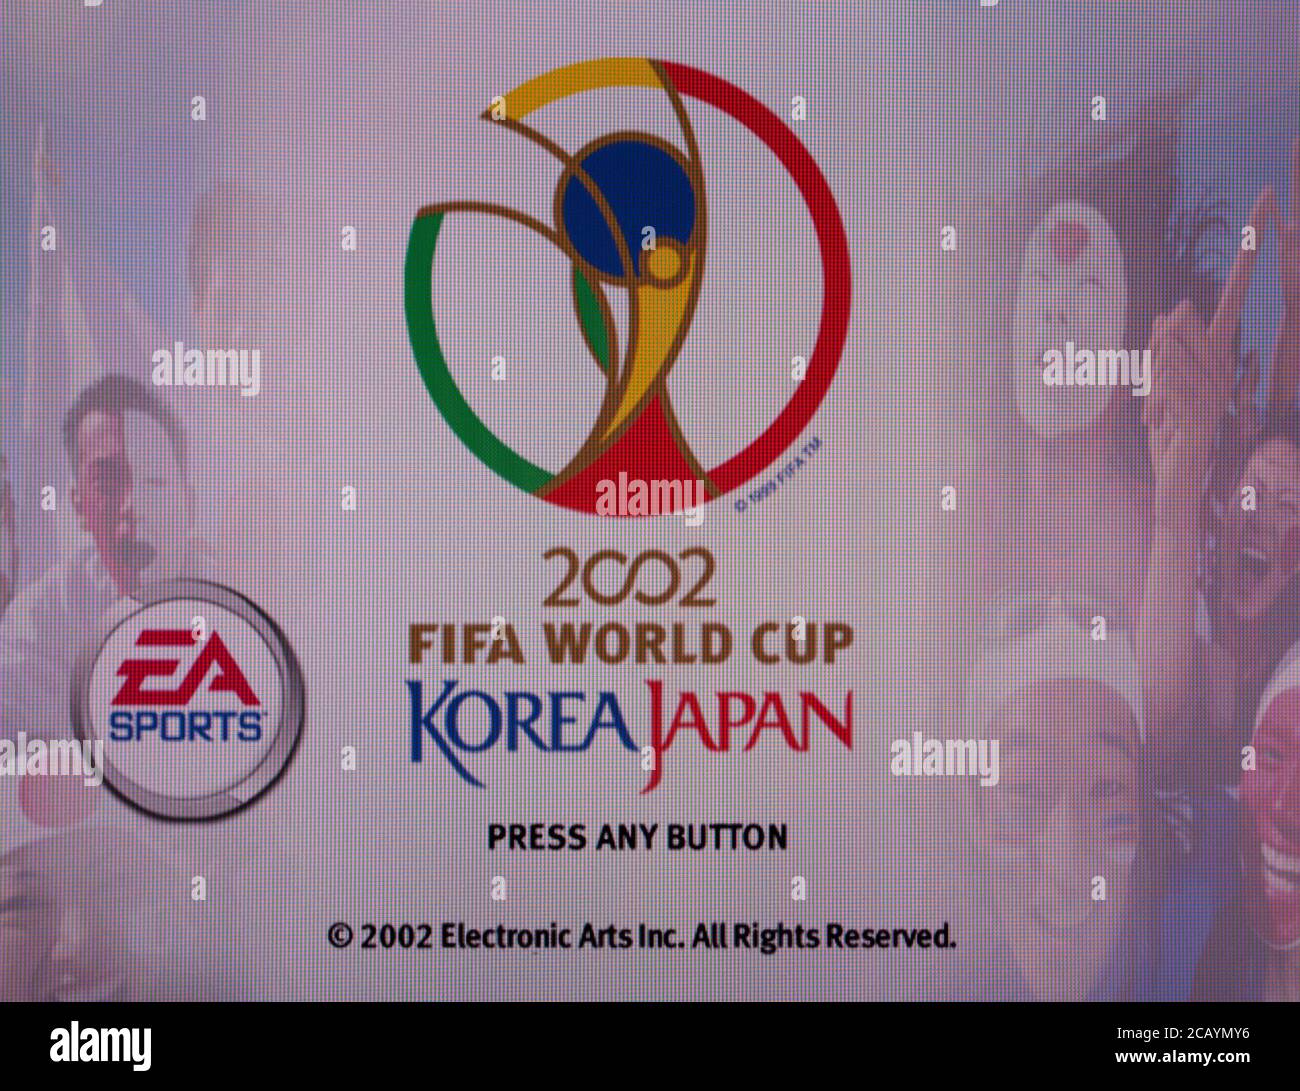 02 Fifa World Cup Korea Japan Nintendo Gamecube Videogame Editorial Use Only Stock Photo Alamy